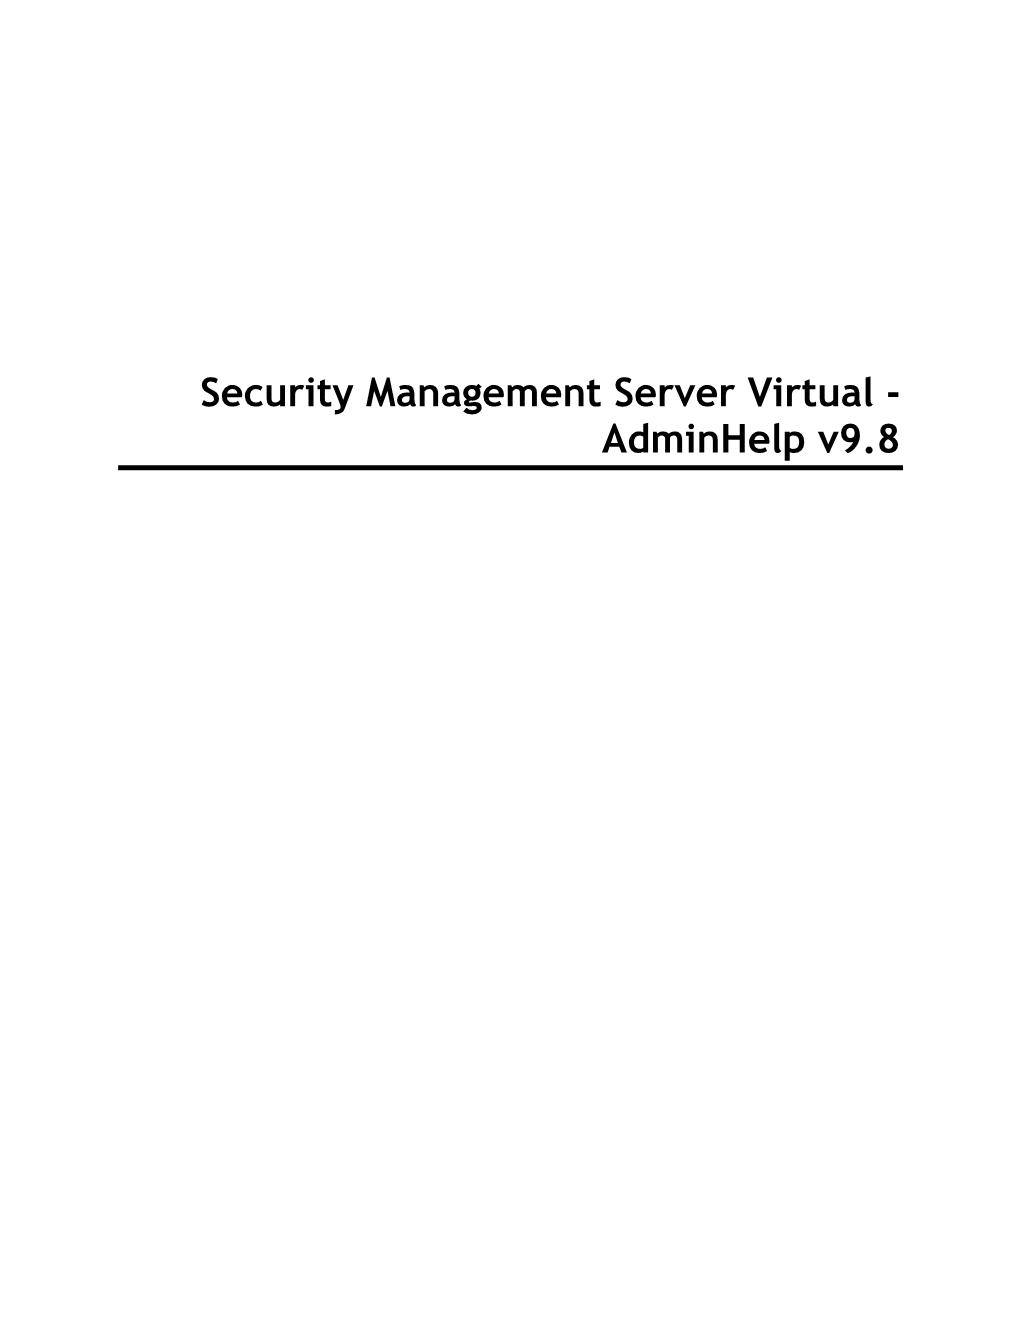 Security Management Server Virtual V9.8